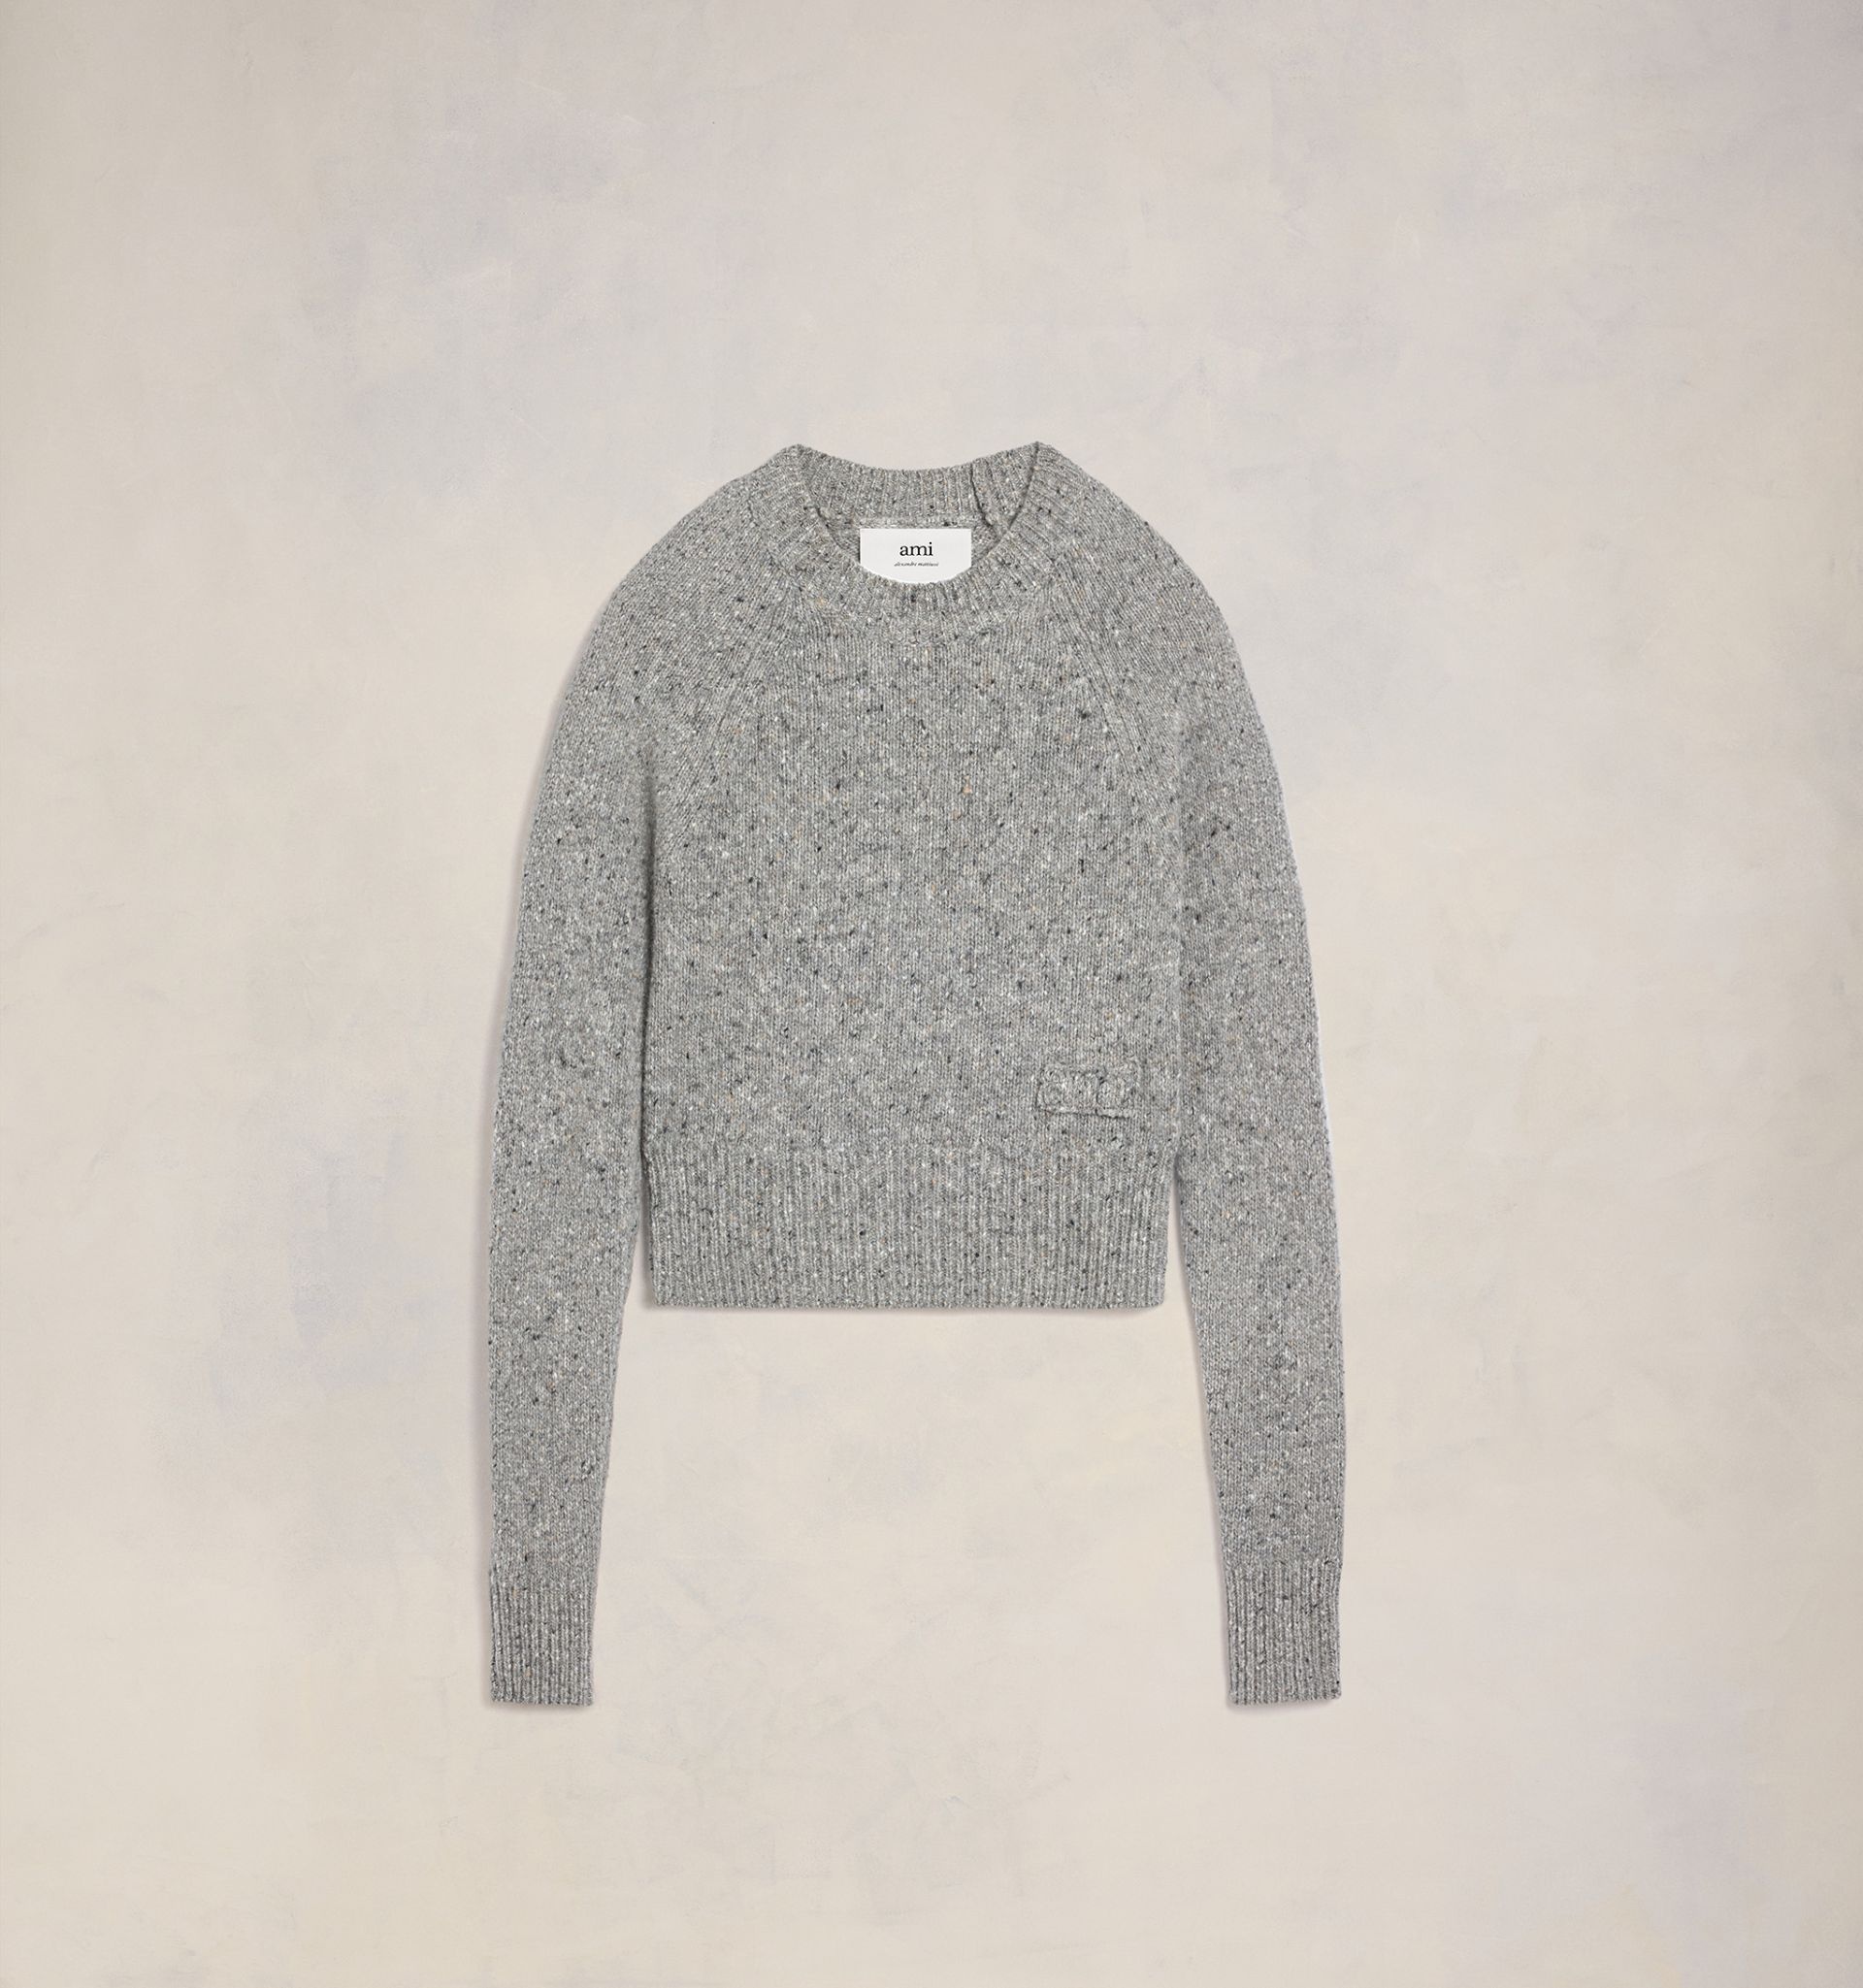 Ami Embroidery Crewneck Sweater - 1